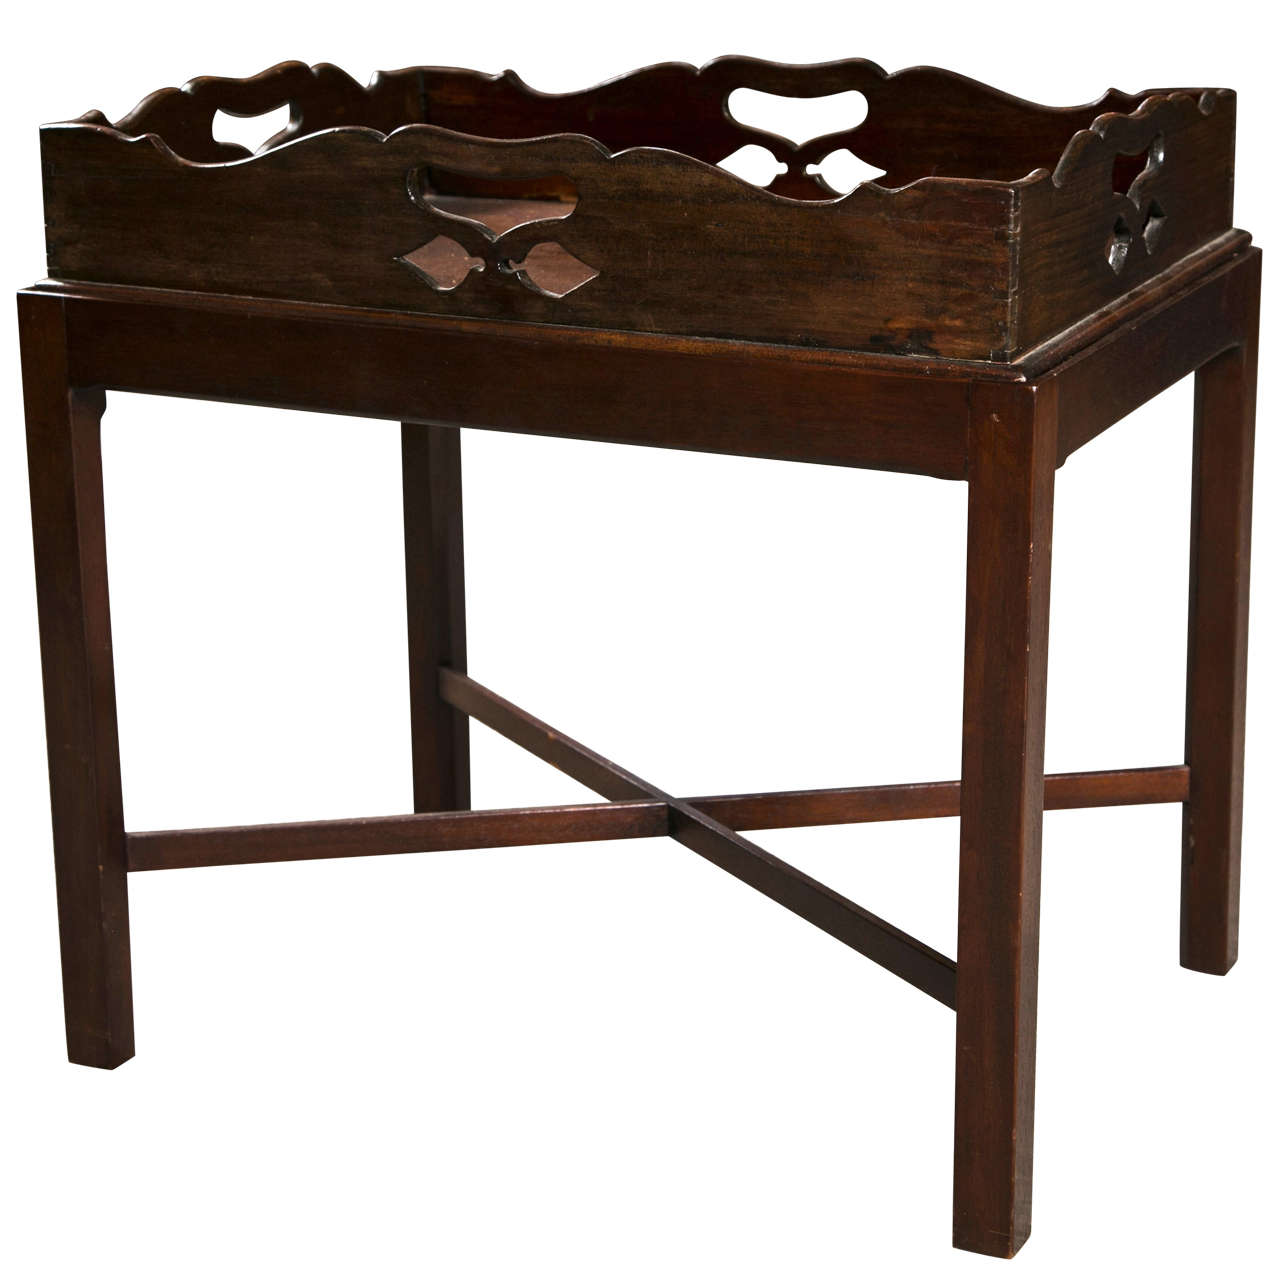 Butlers-Tabletttisch aus Mahagoni, spätes 19. Jahrhundert, England